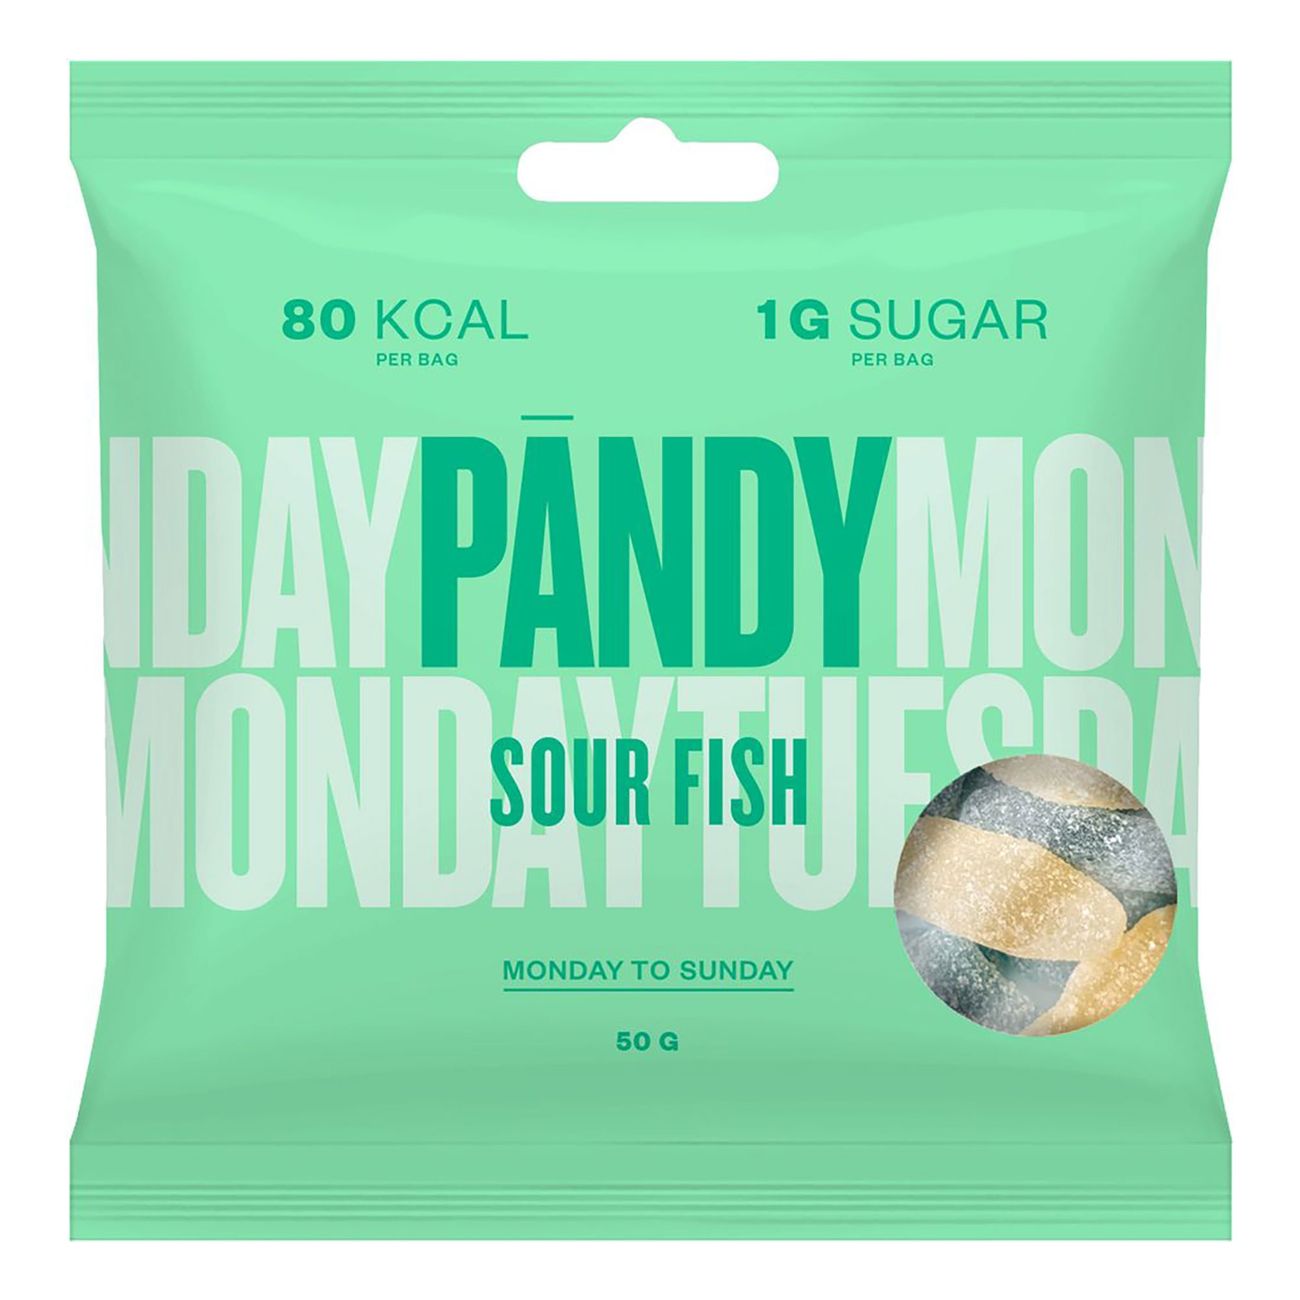 pandy-sour-fish-86148-1